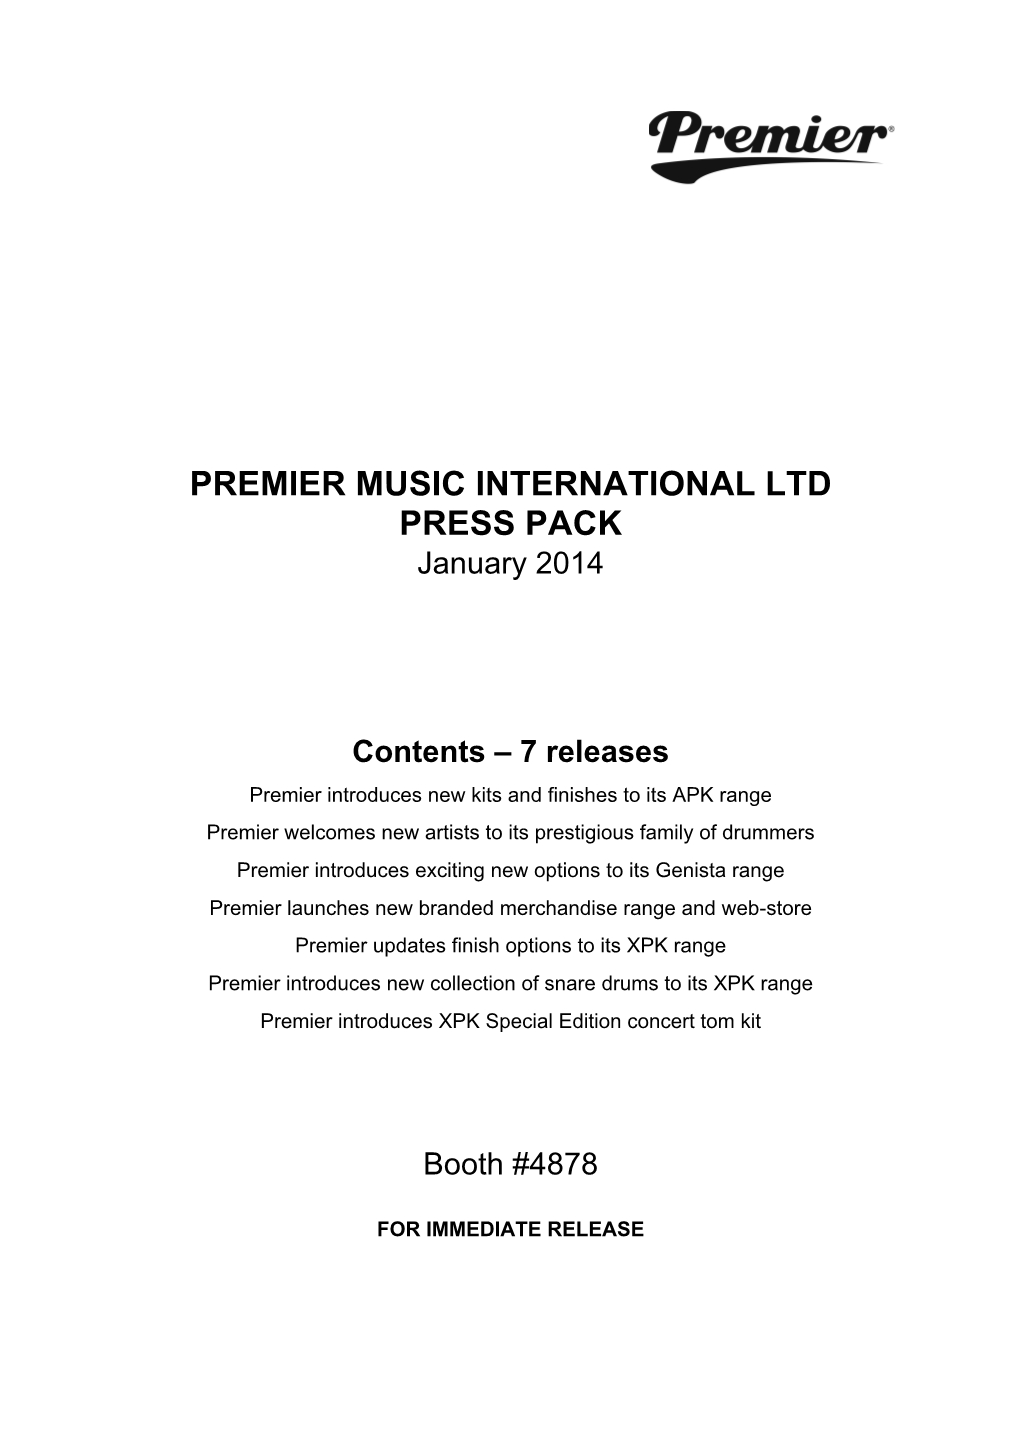 PREMIER MUSIC INTERNATIONAL LTD PRESS PACK January 2014